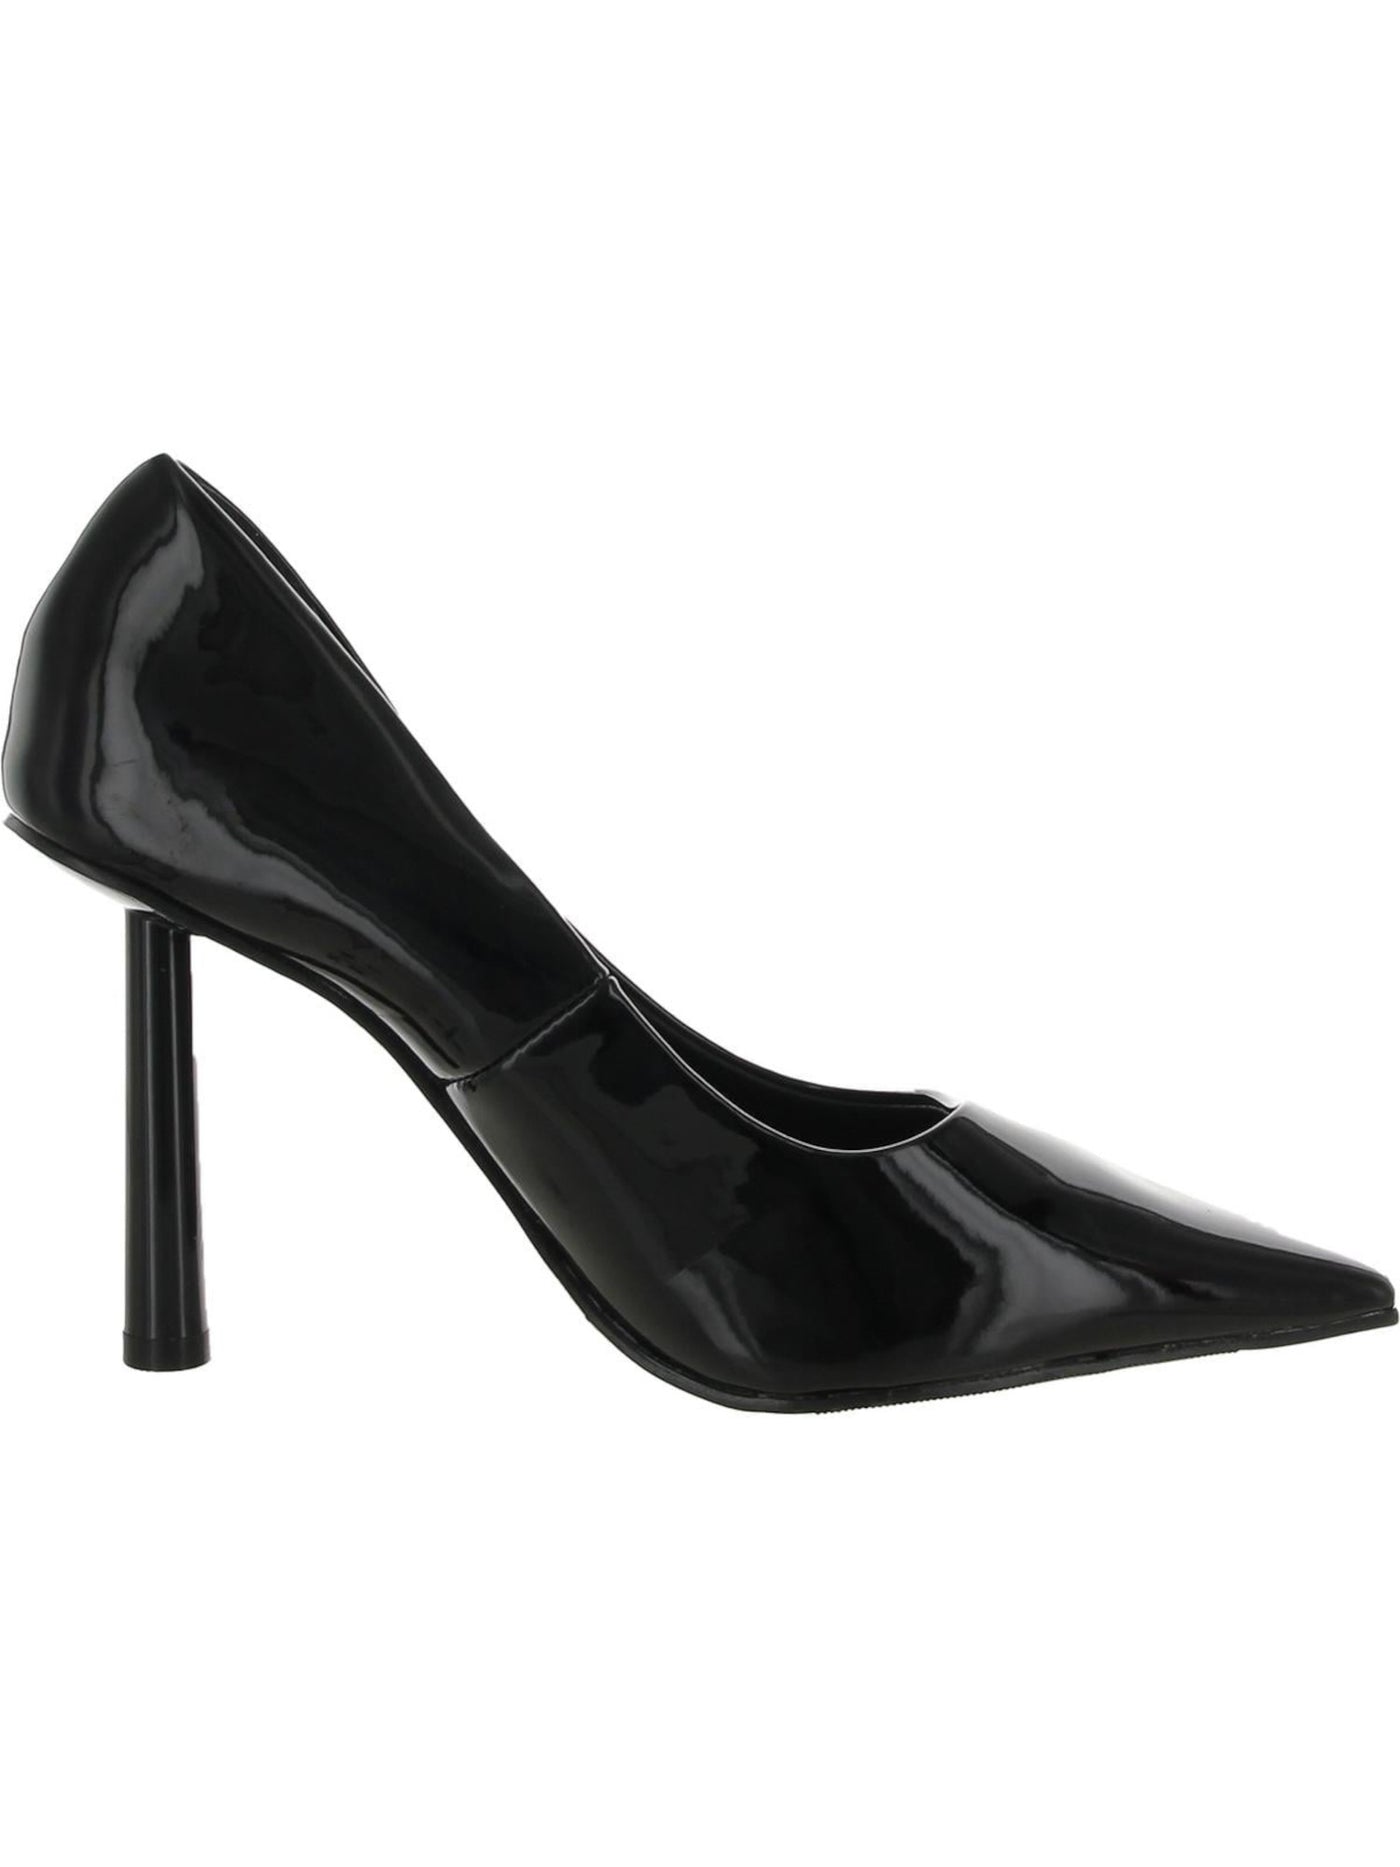 WILD PAIR Womens Black Slip Resistant Comfort Taraa Pointed Toe Stiletto Slip On Pumps Shoes 5.5 M